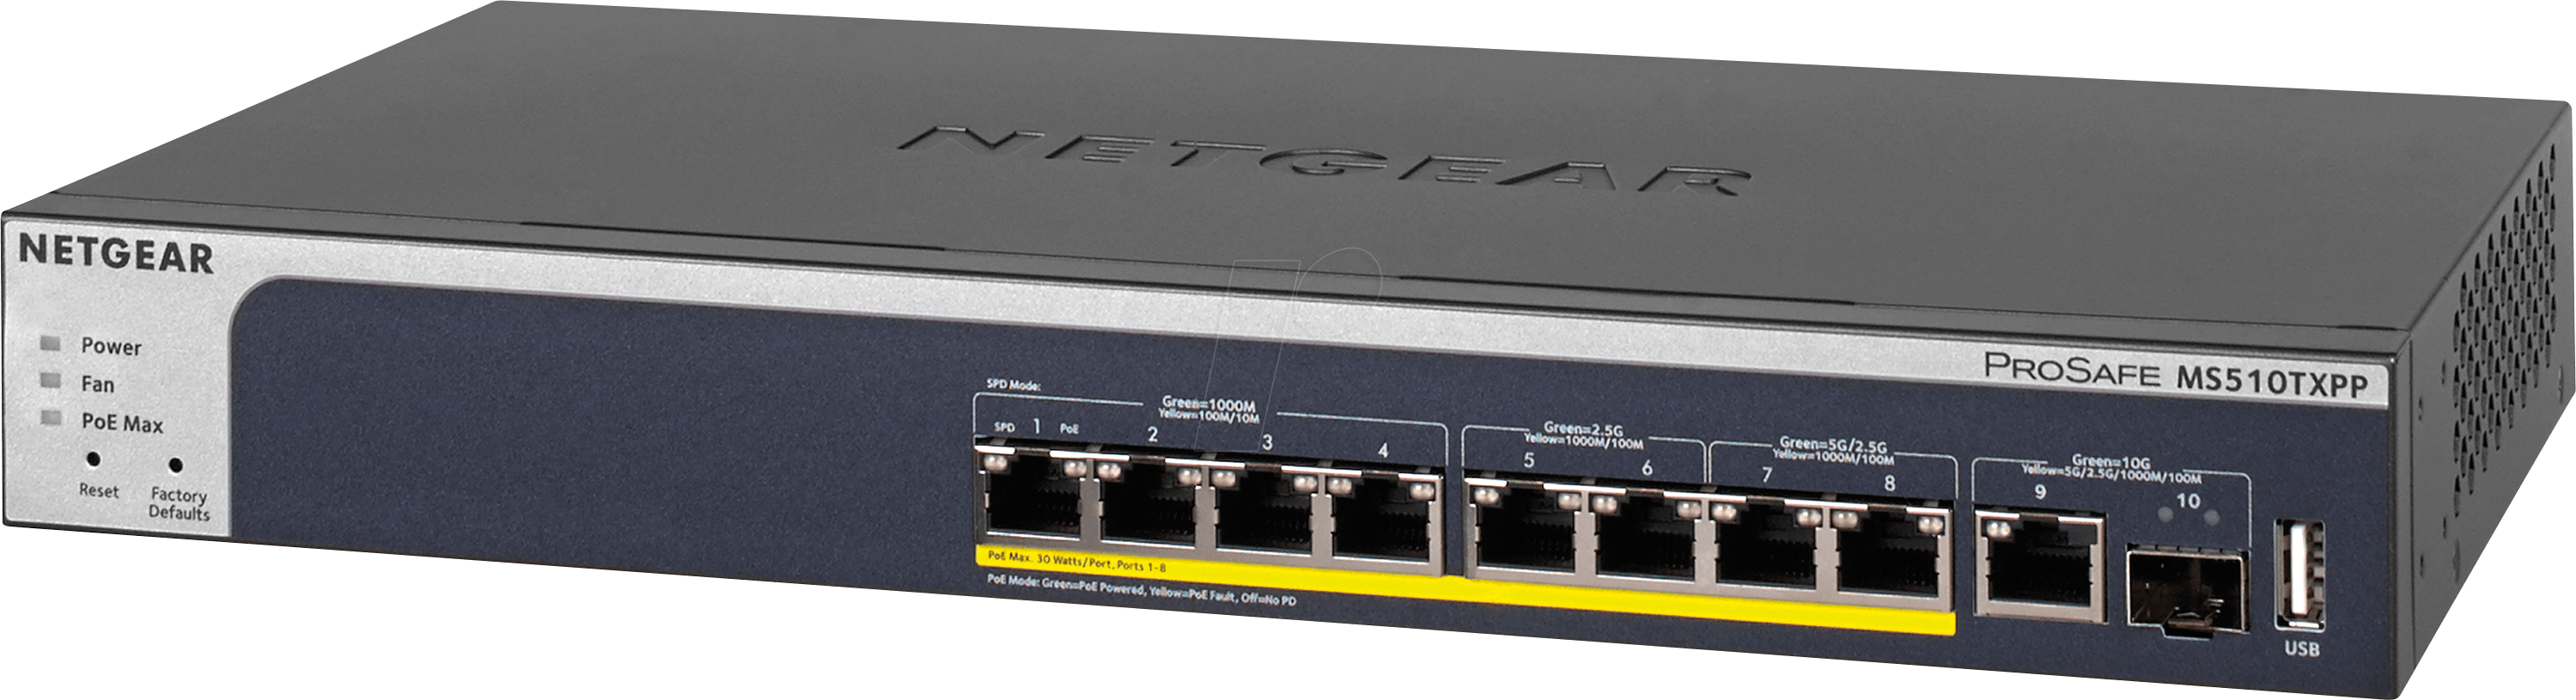 Netgear MS510TXPP NETGEAR 8-Port PoE+ Multi-Gigabit Smart Managed Pro Switch with 10G Copper/Fiber Uplinks, MS510TXPP